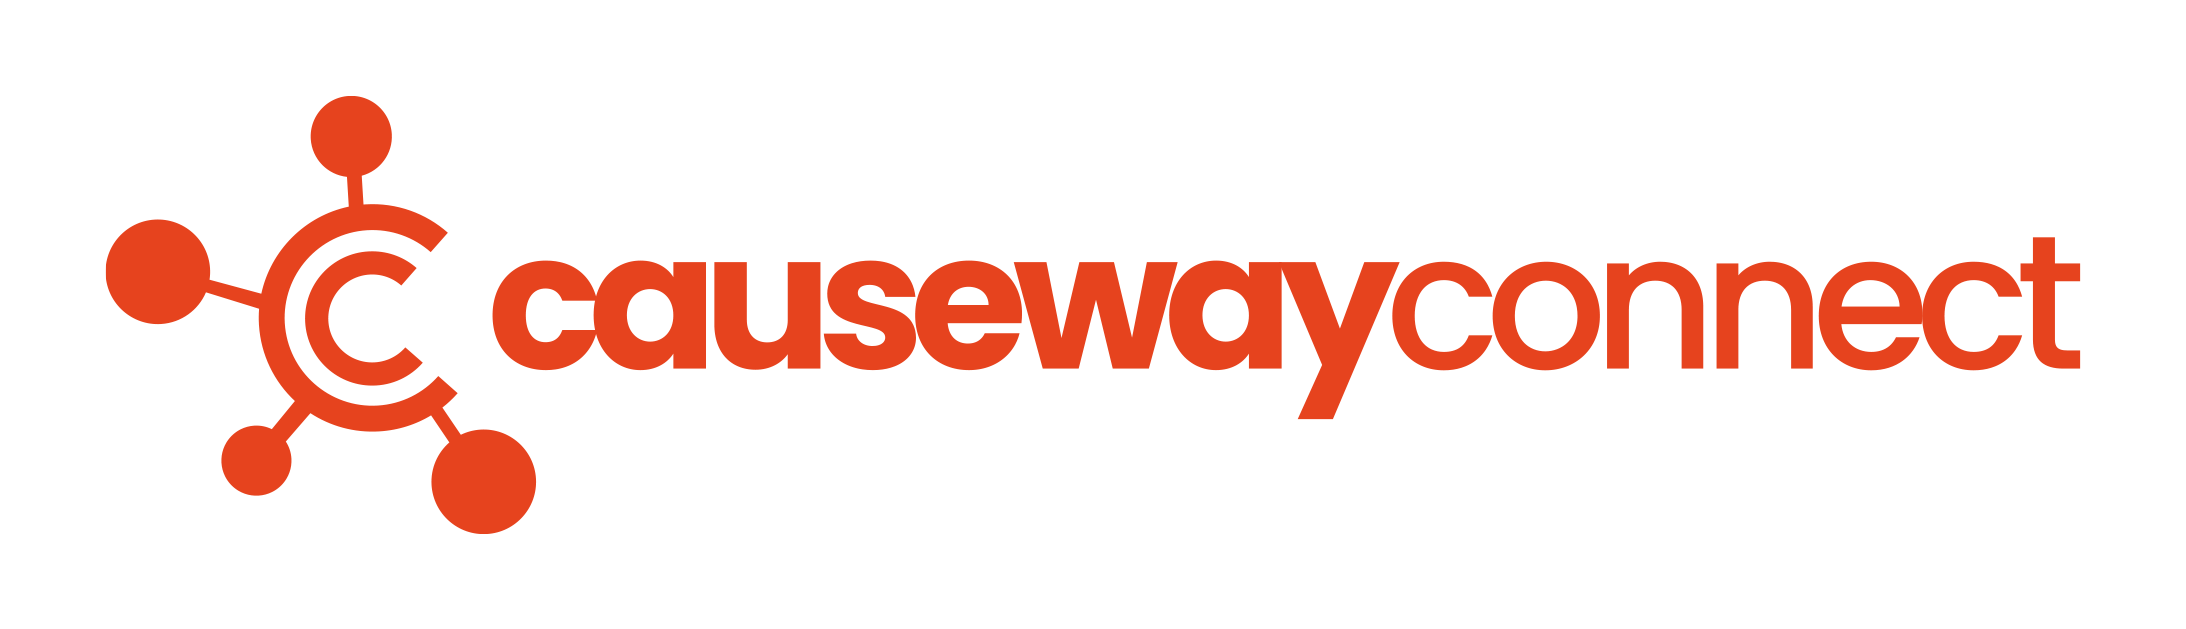 causeway connect logo